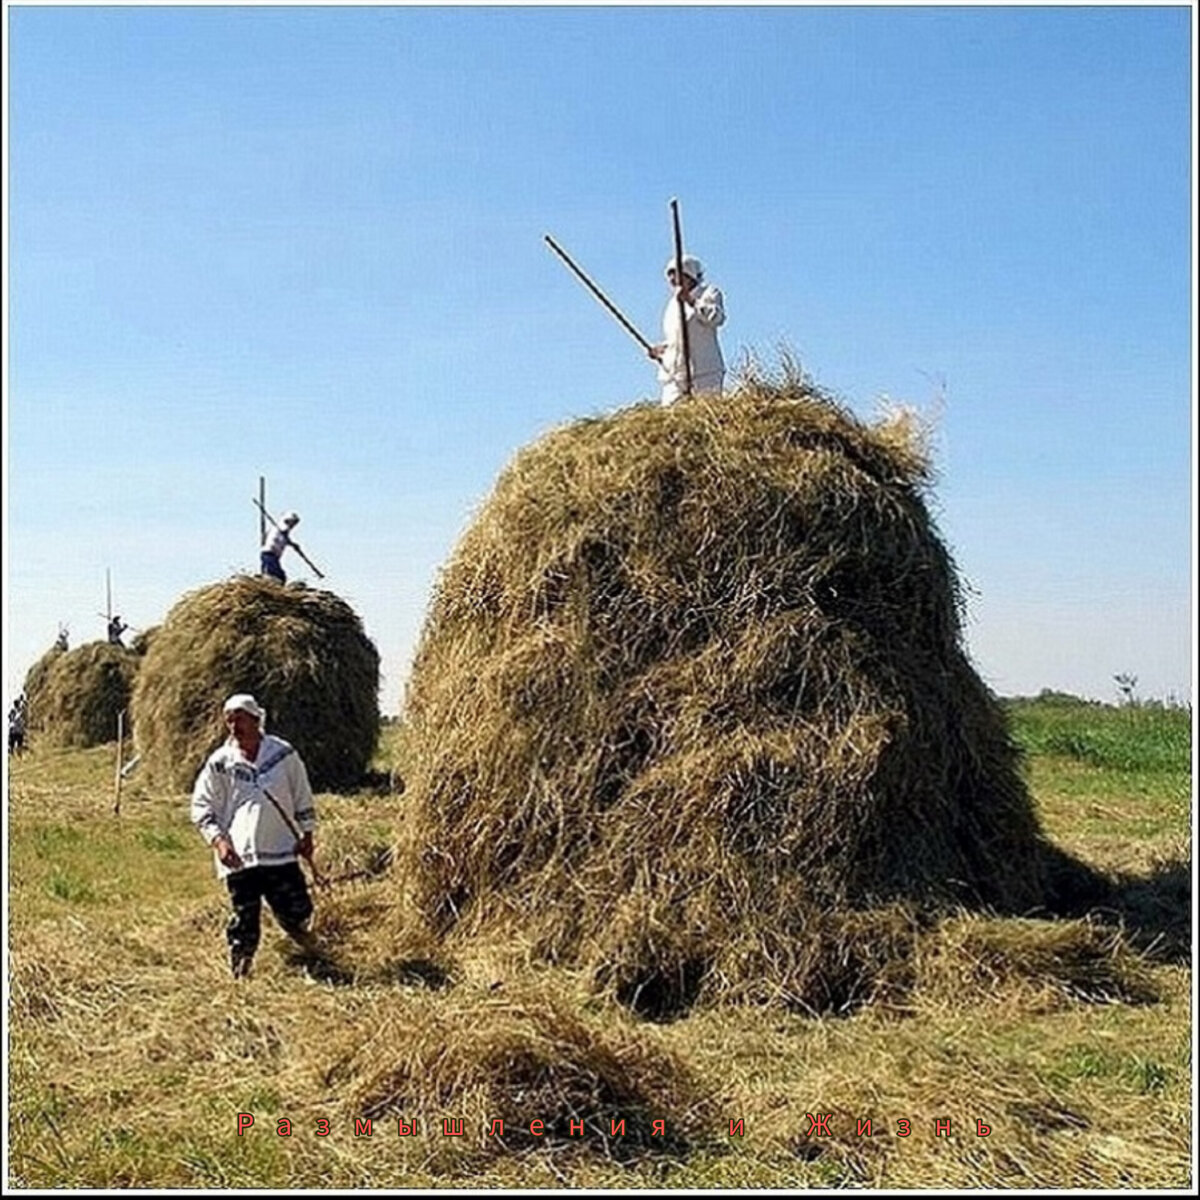 Косил сено стог сена. Лето в деревне сенокос. Деревня поле сенокос. Деревня сено. Заготовка сена в деревне.